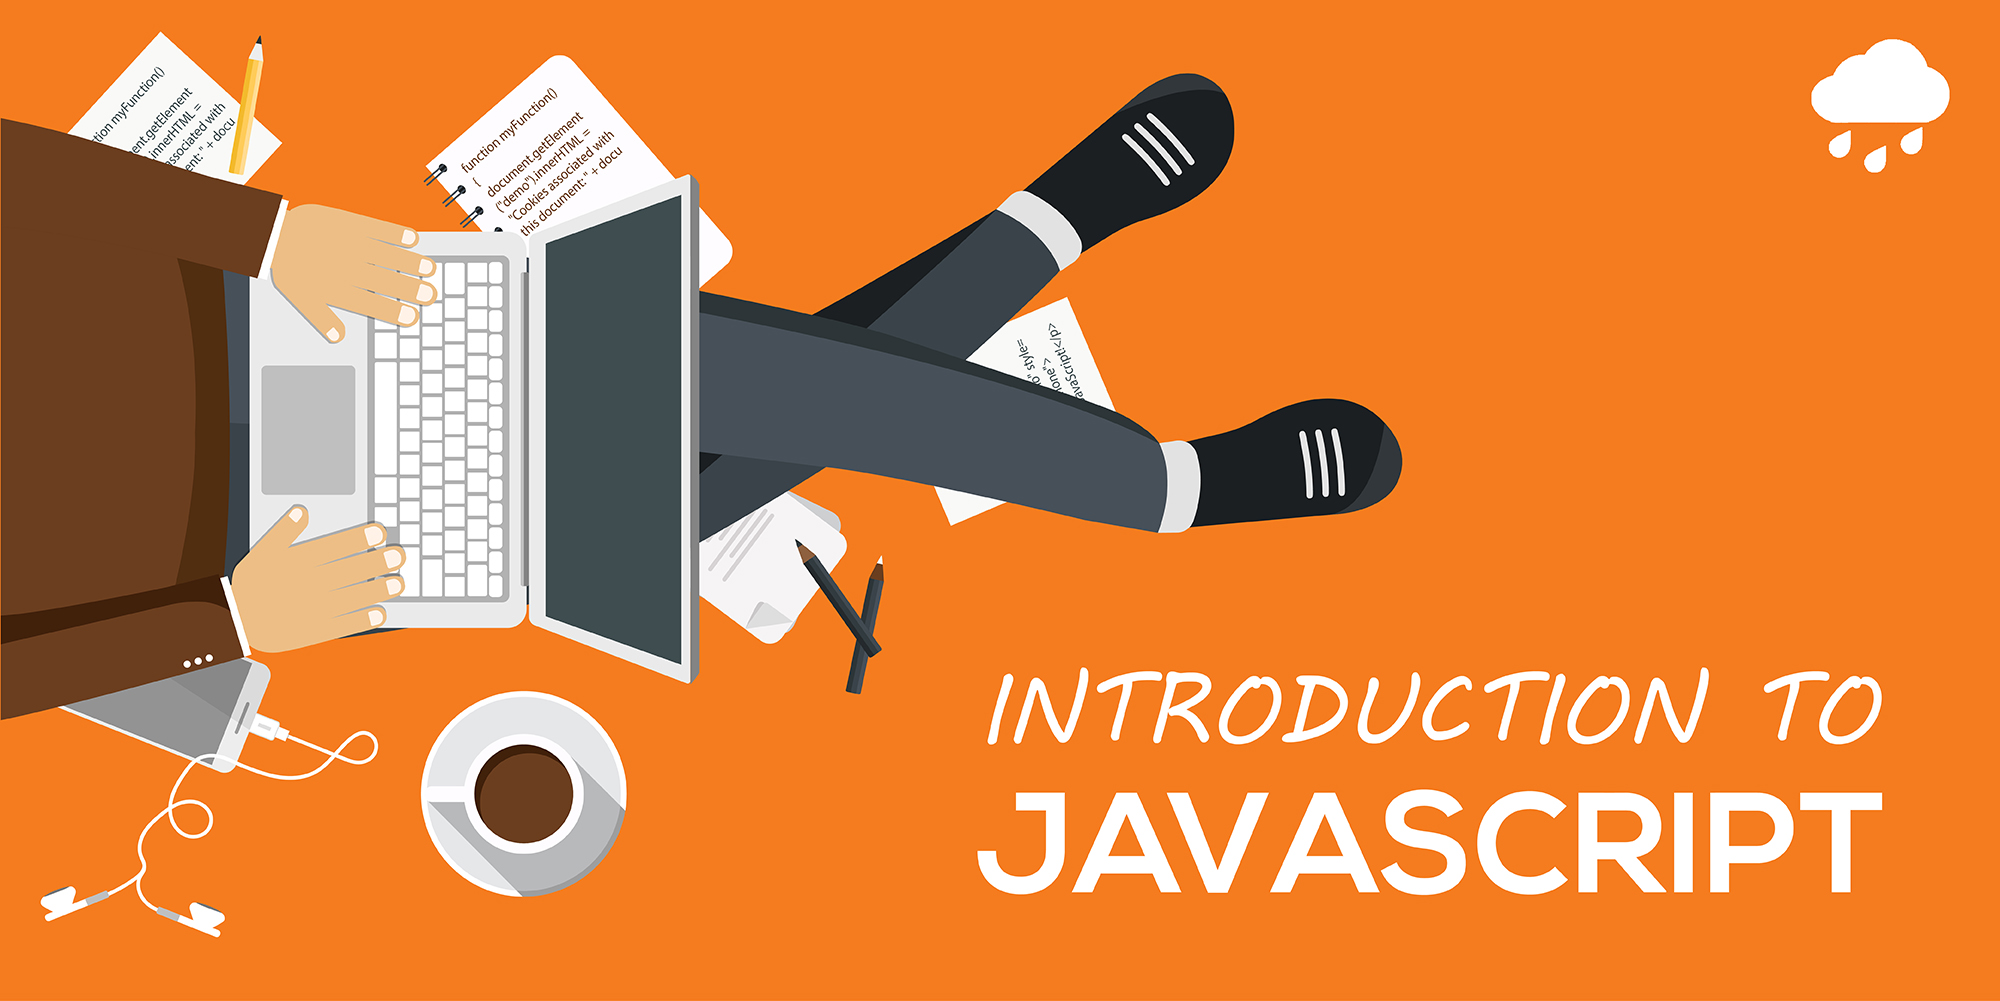 Bsic Java Script Introduction